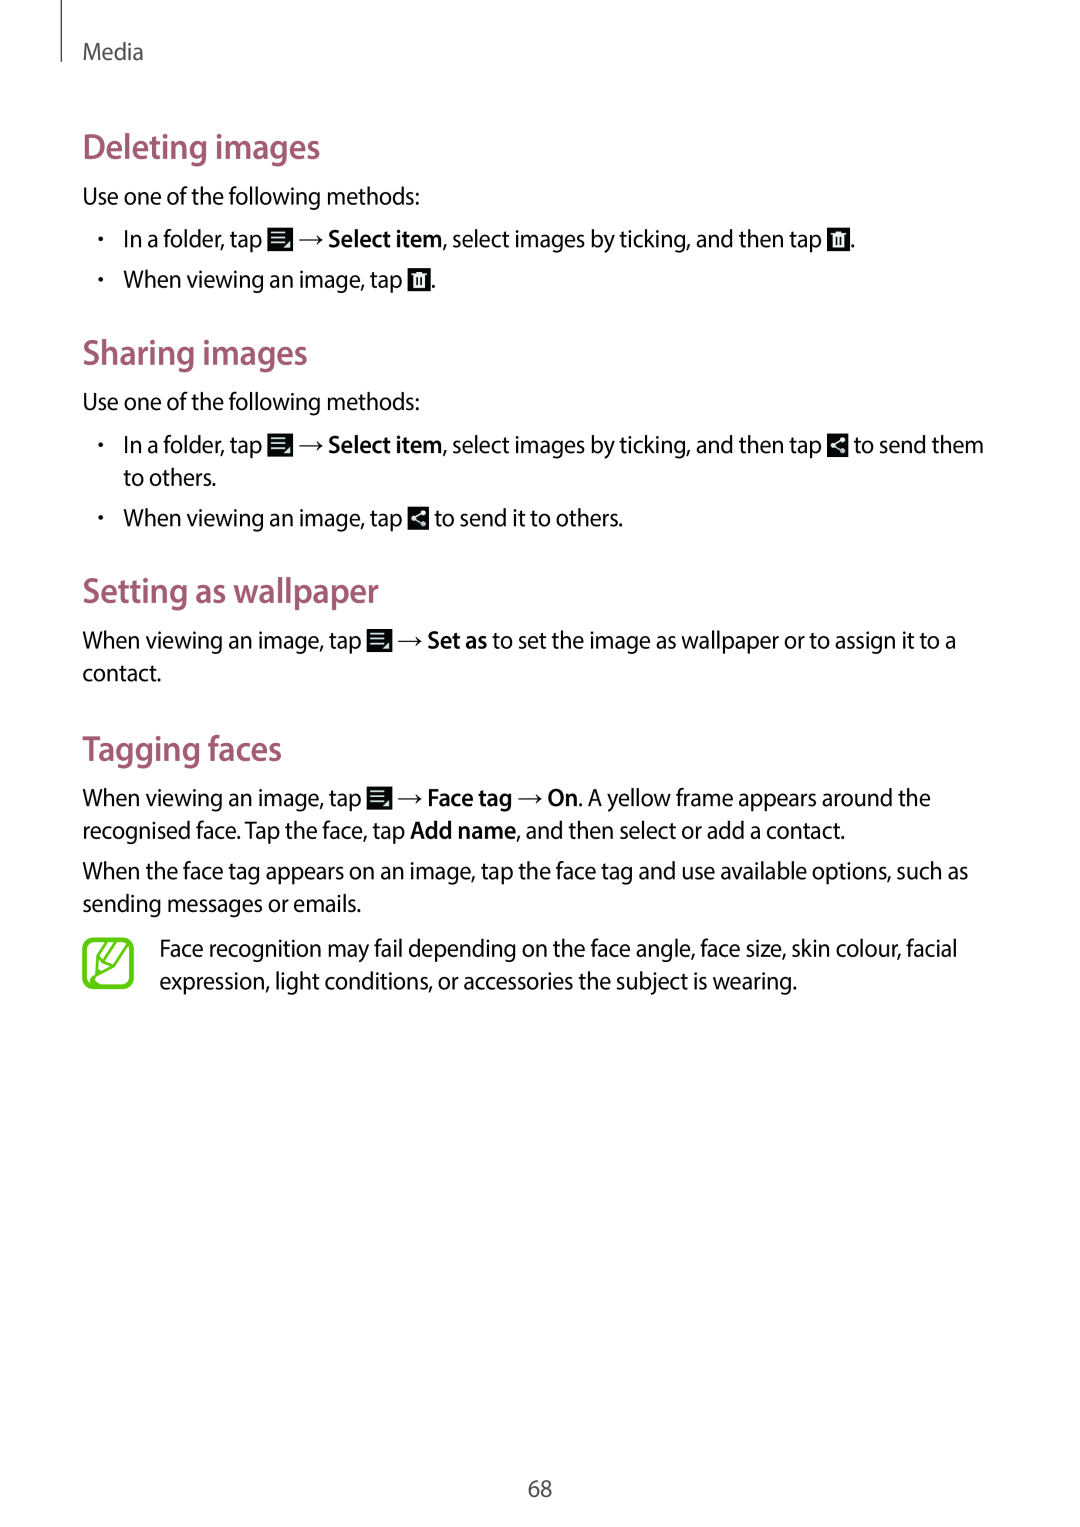 Samsung EK-GC100 user manual Deleting images, Sharing images, Setting as wallpaper, Tagging faces, Media 